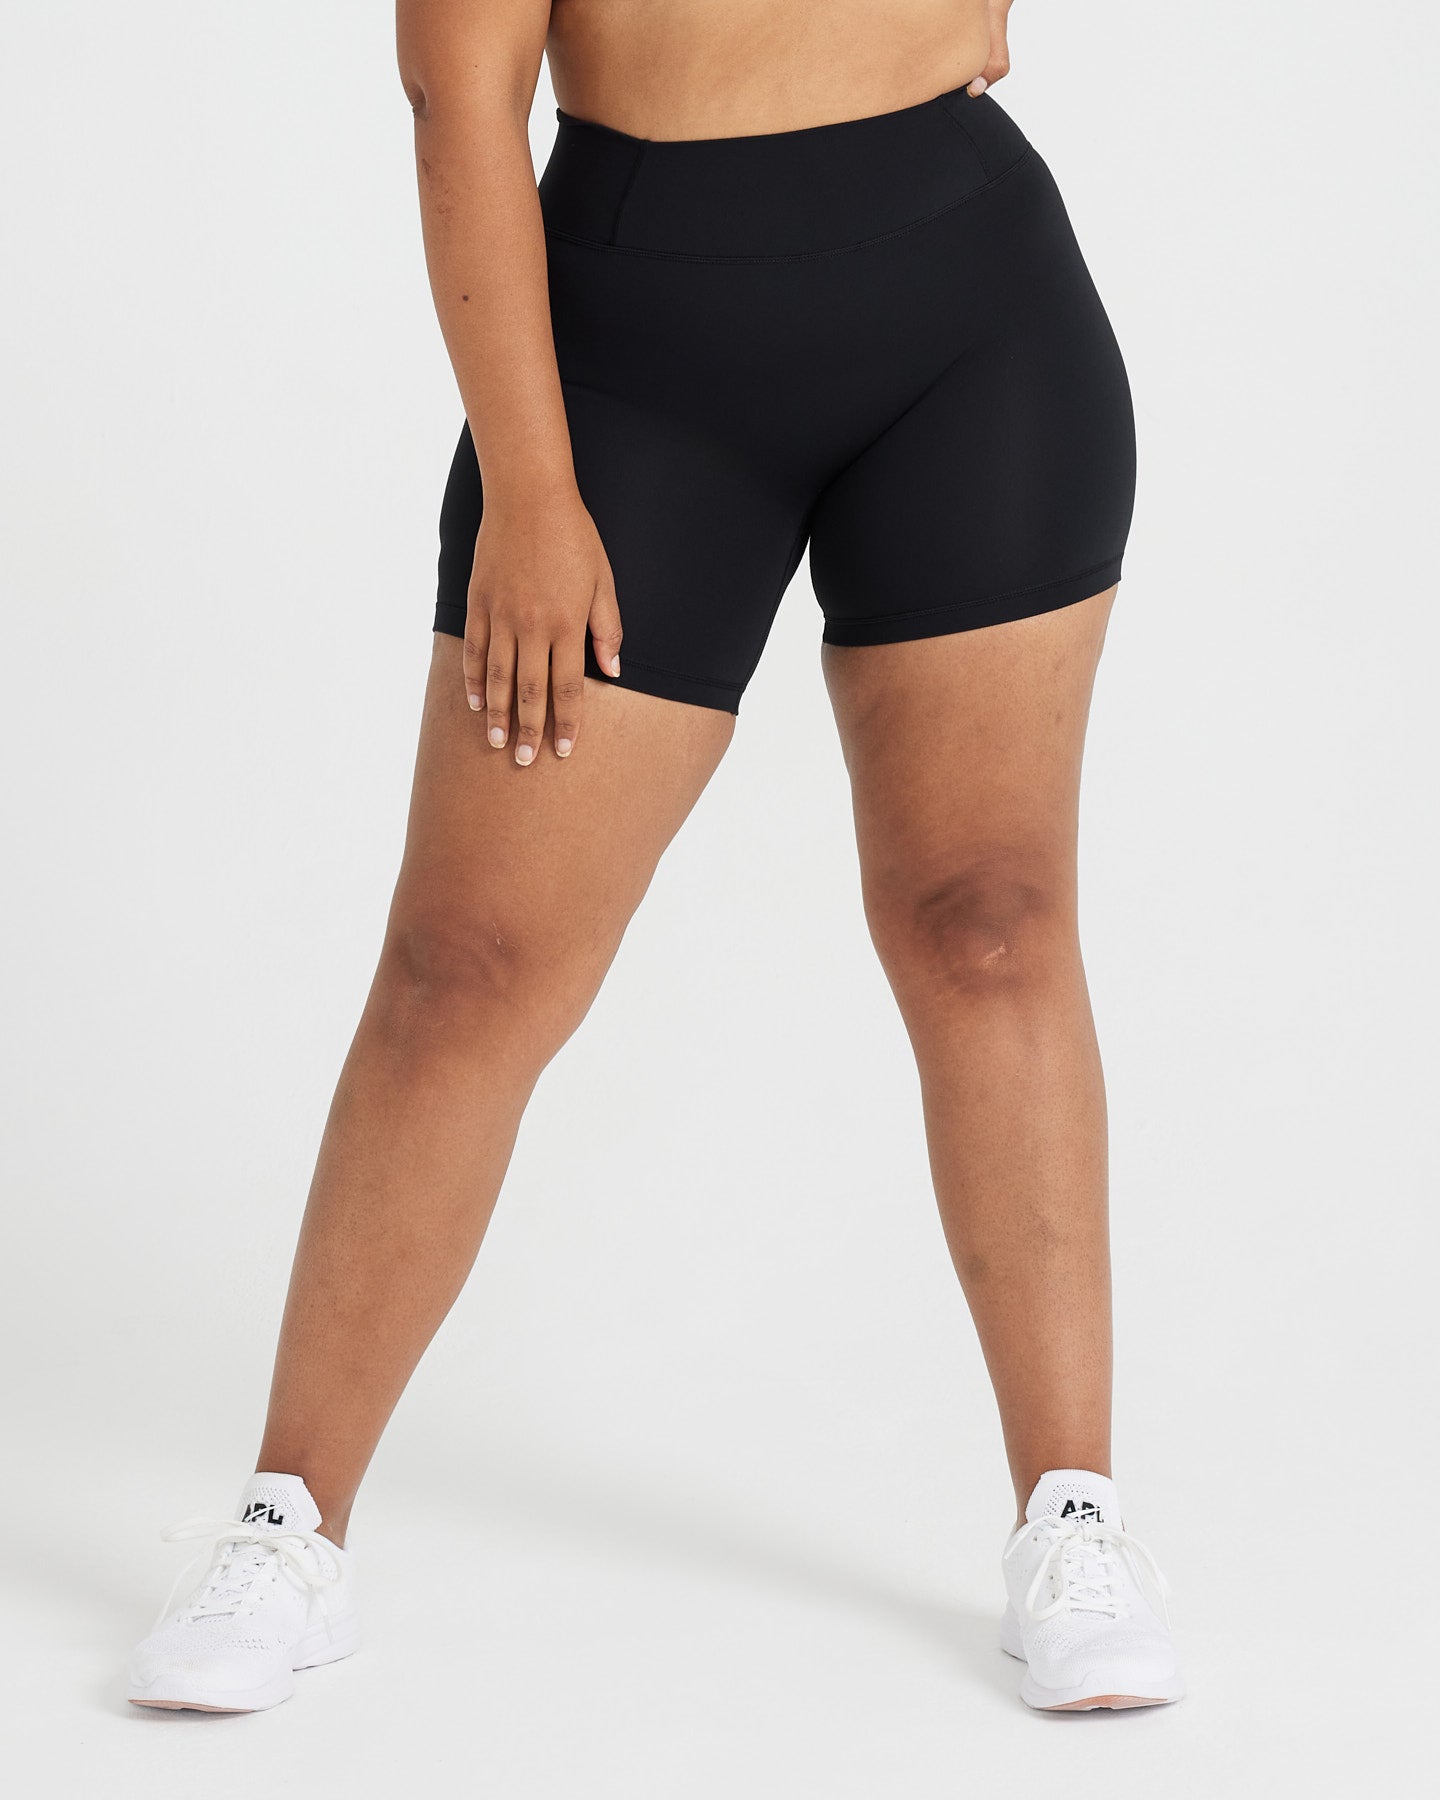 Black High Waisted Shorts Women - Timeless | Oner Active US